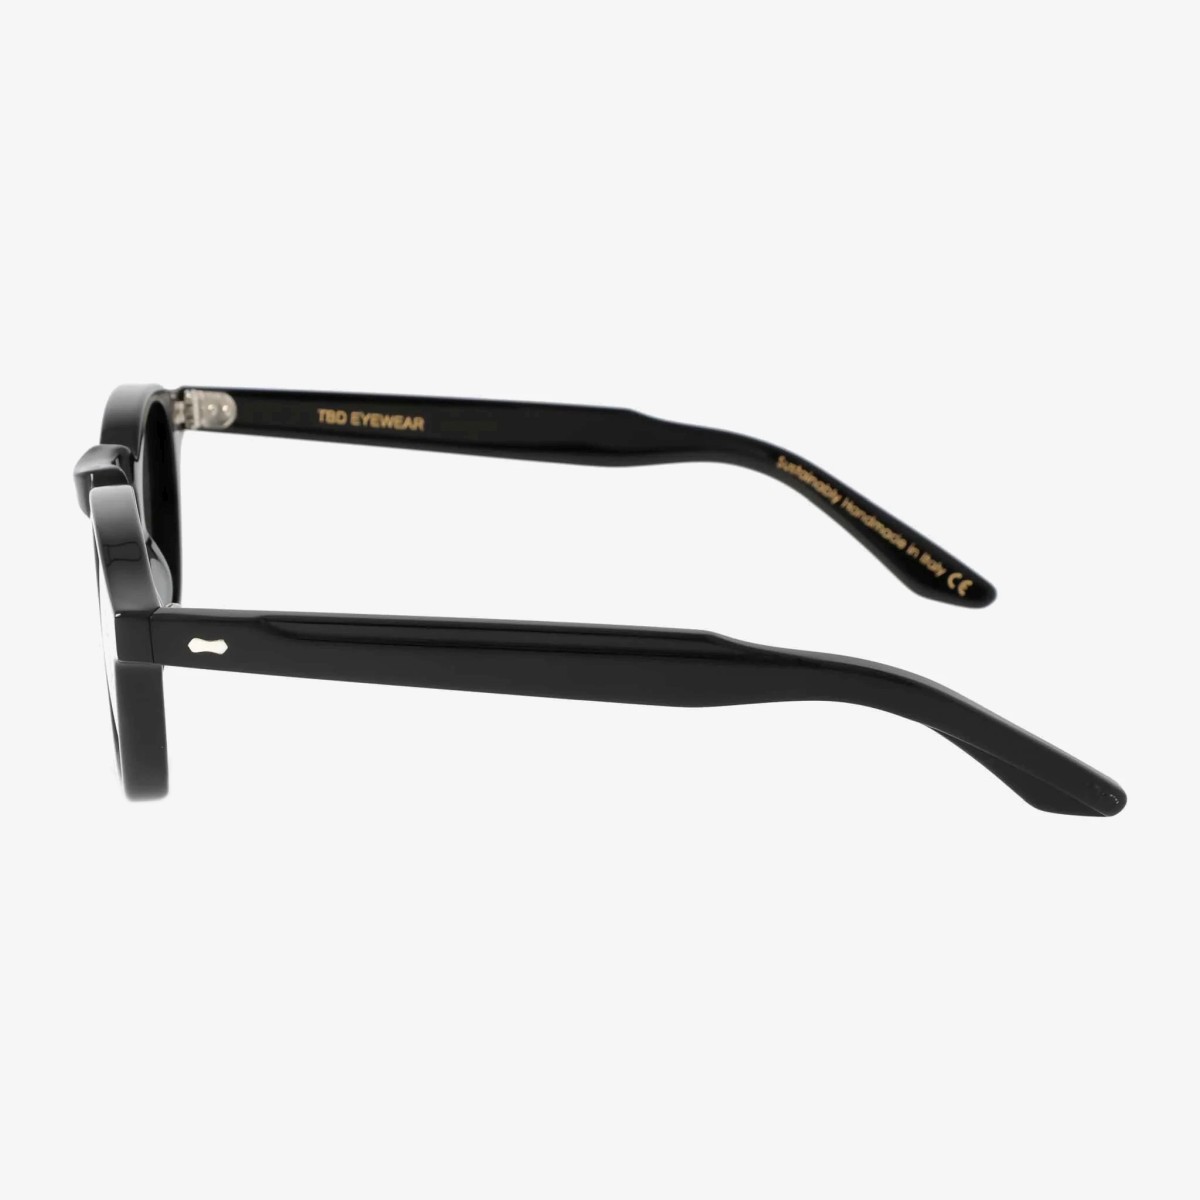 TBD Eyewear Cord black frame grey lenses sunglasses